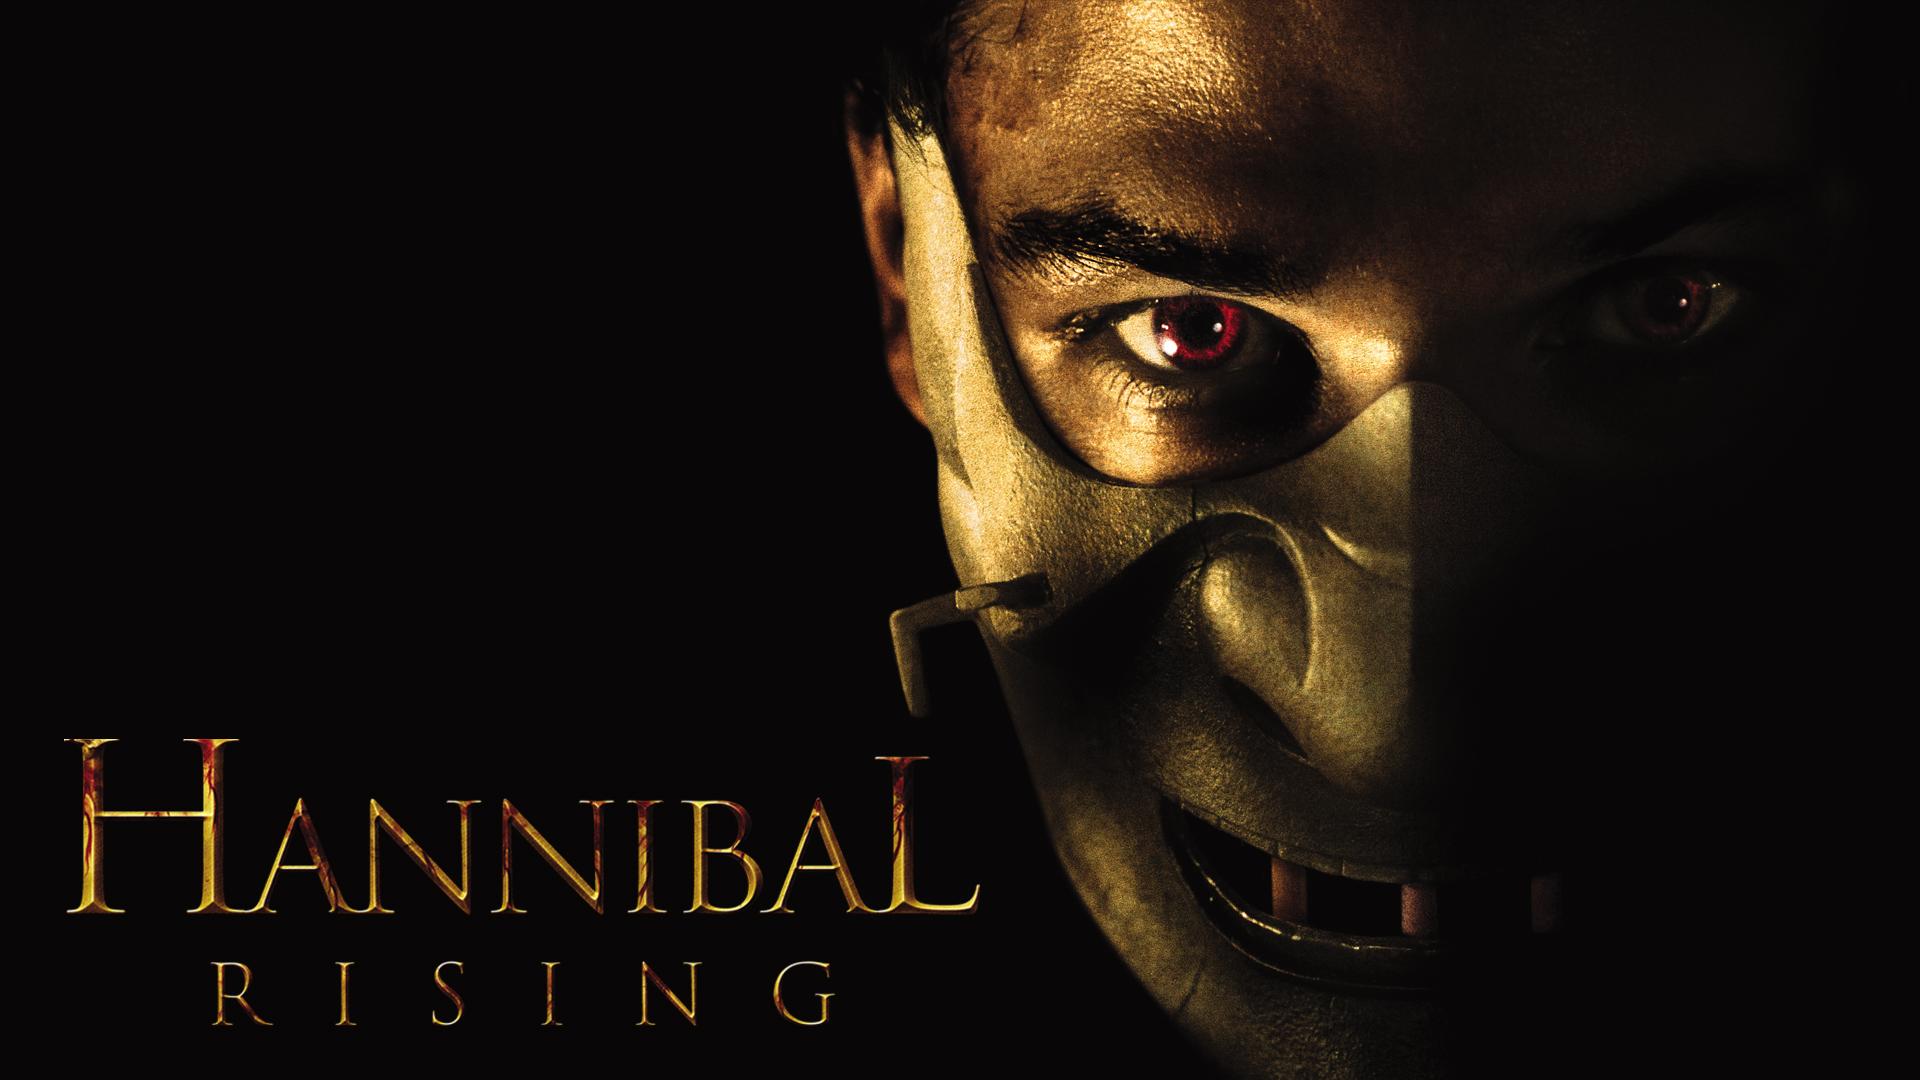 Hannibal Rising - Hannibal ébredése (2007)